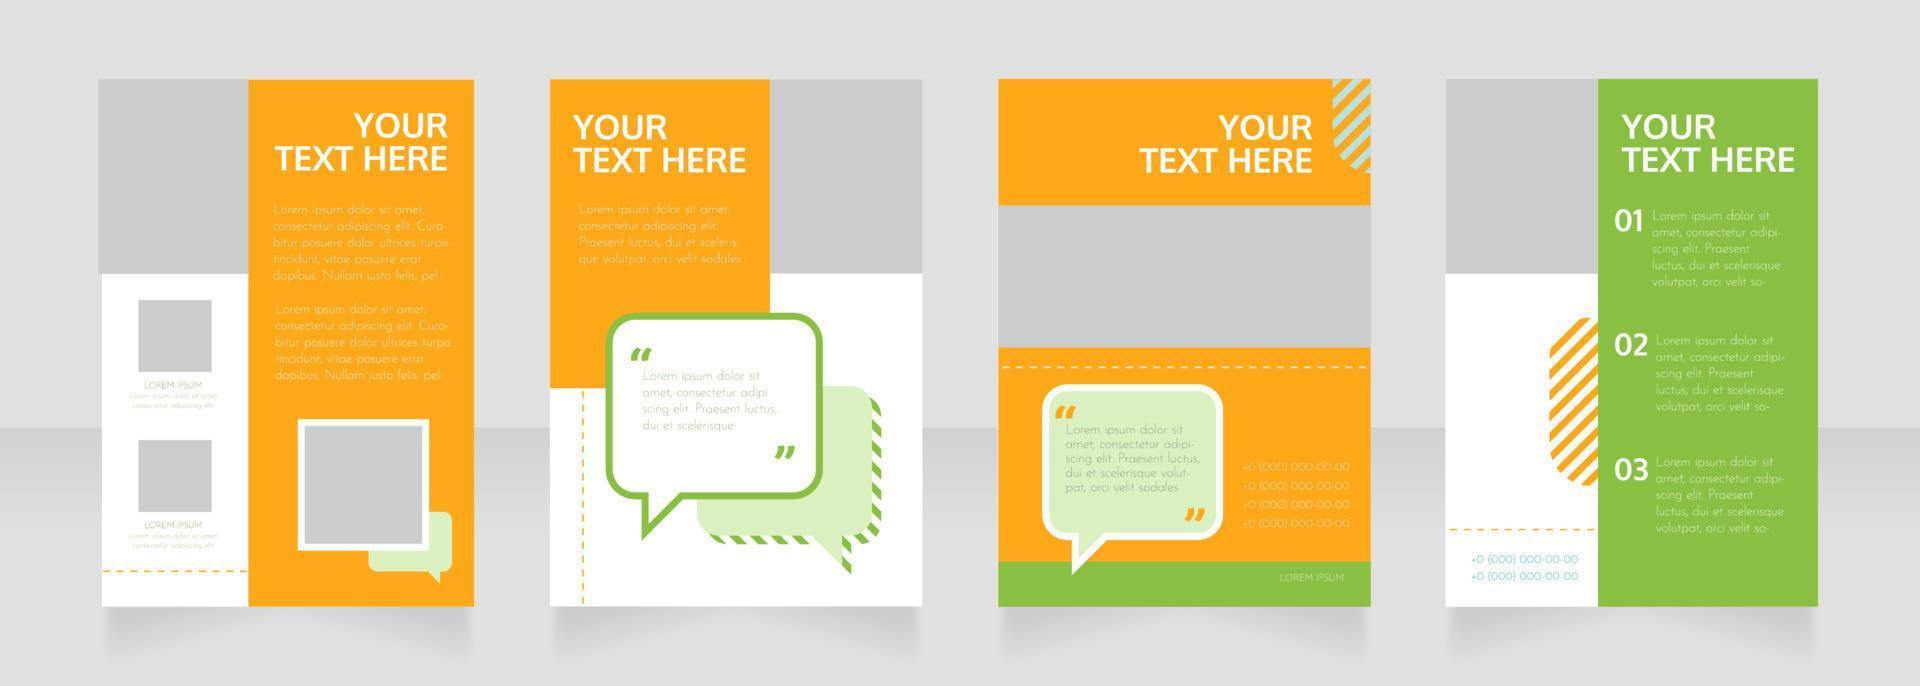 Marketing service blank brochure layout design vector